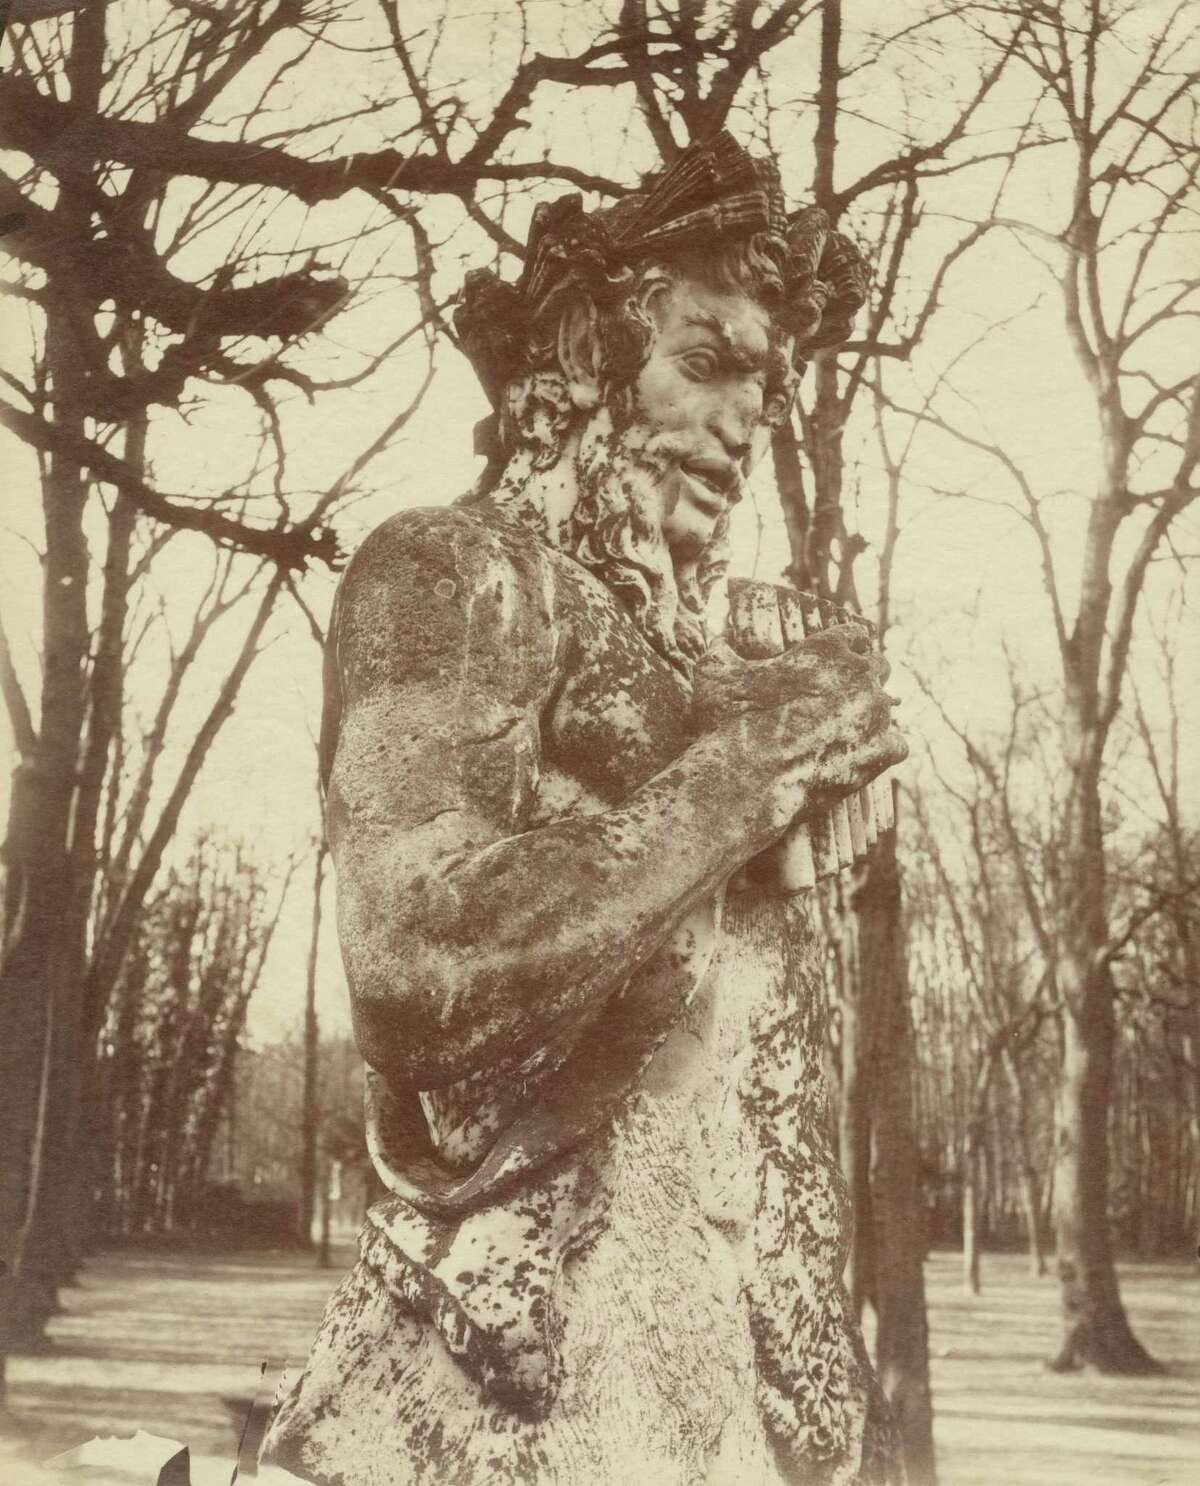 Eugène Atget, “Versailles (Faune)” (1901)